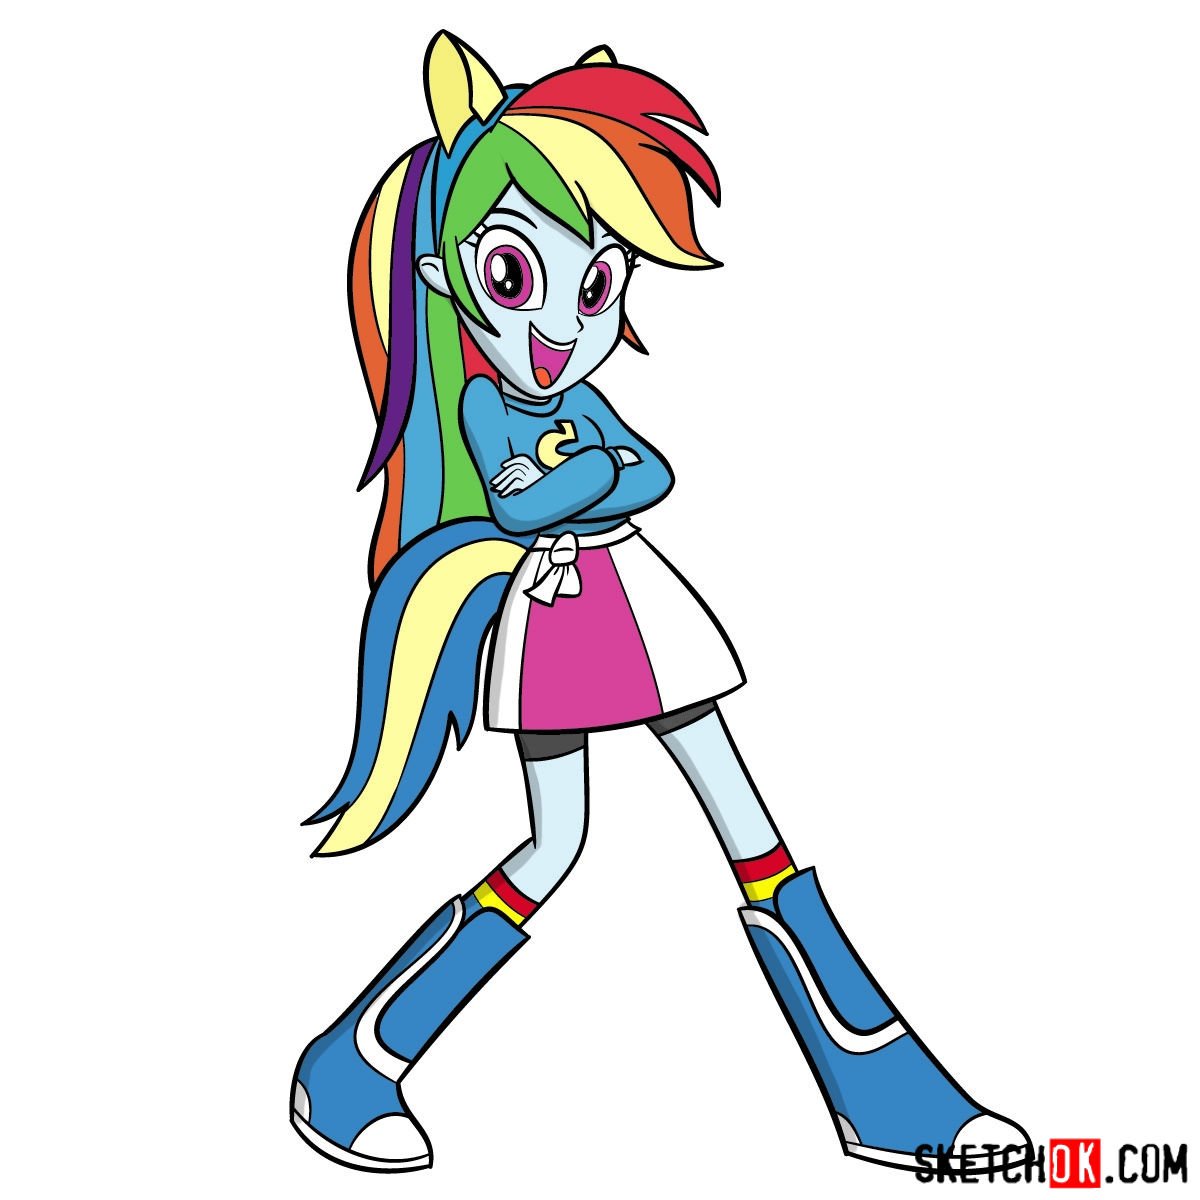 How to draw Rainbow Dash - Equestria Girls